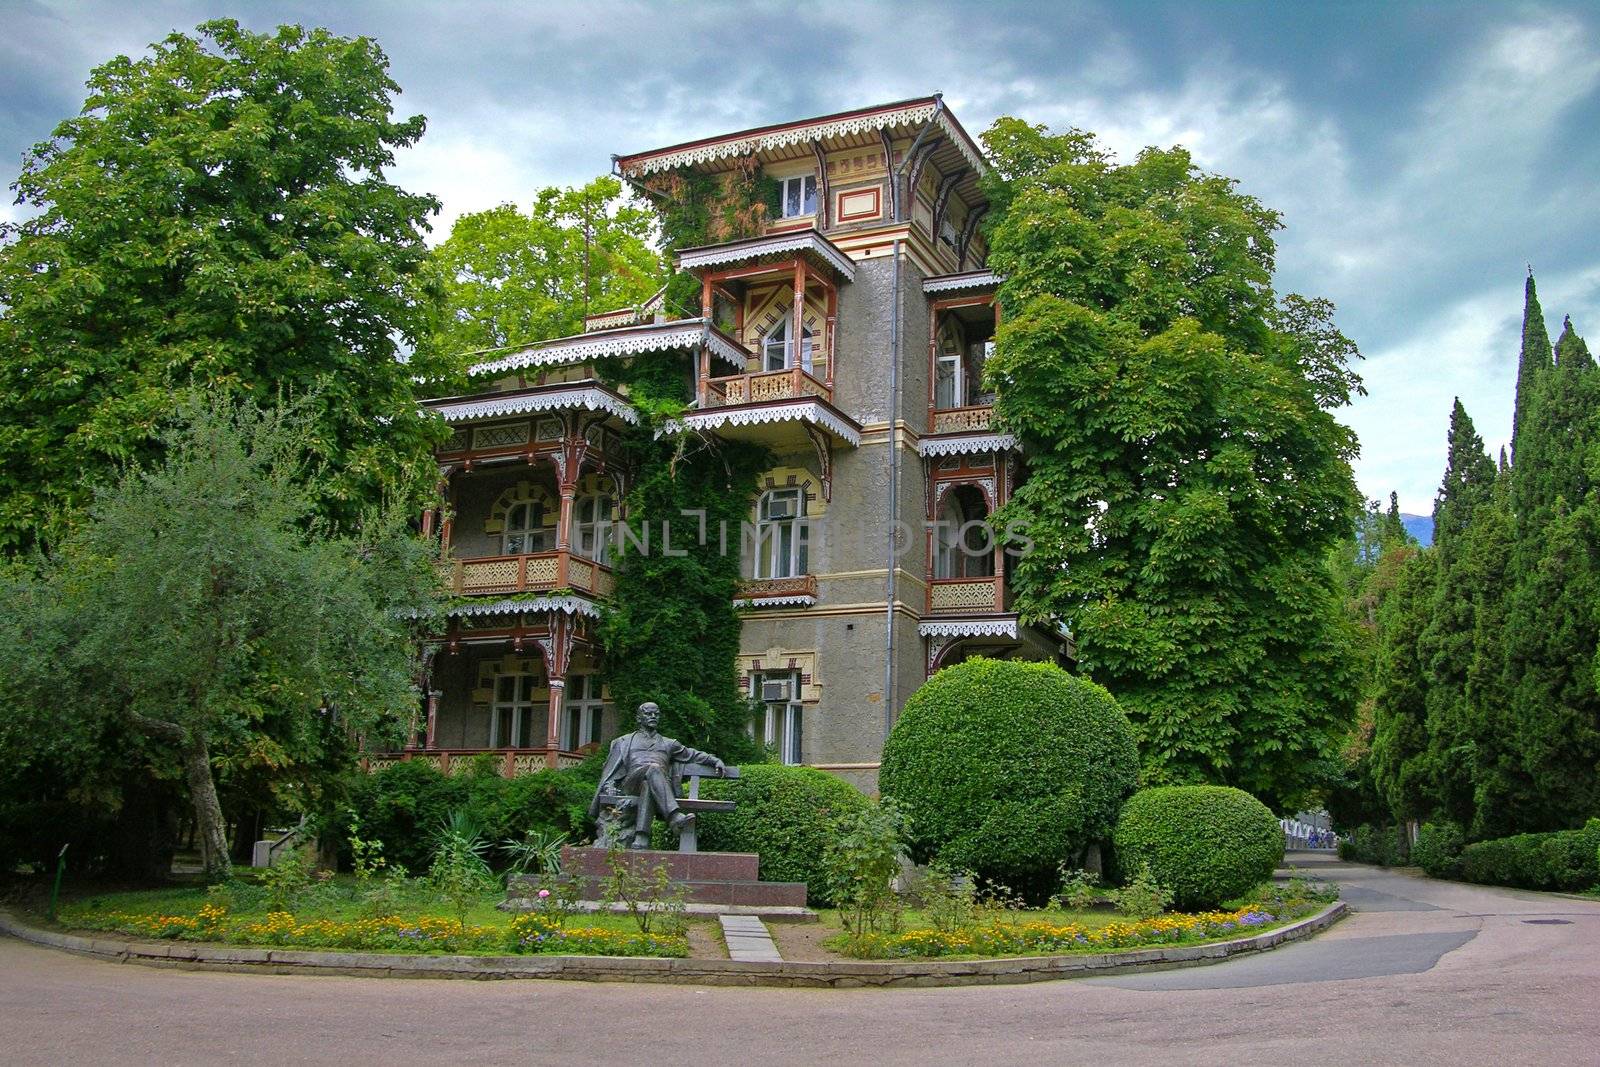 Sanatorium building in Gurzuf (Crimea Ukraine). The monument to Lenin is in a foreground.